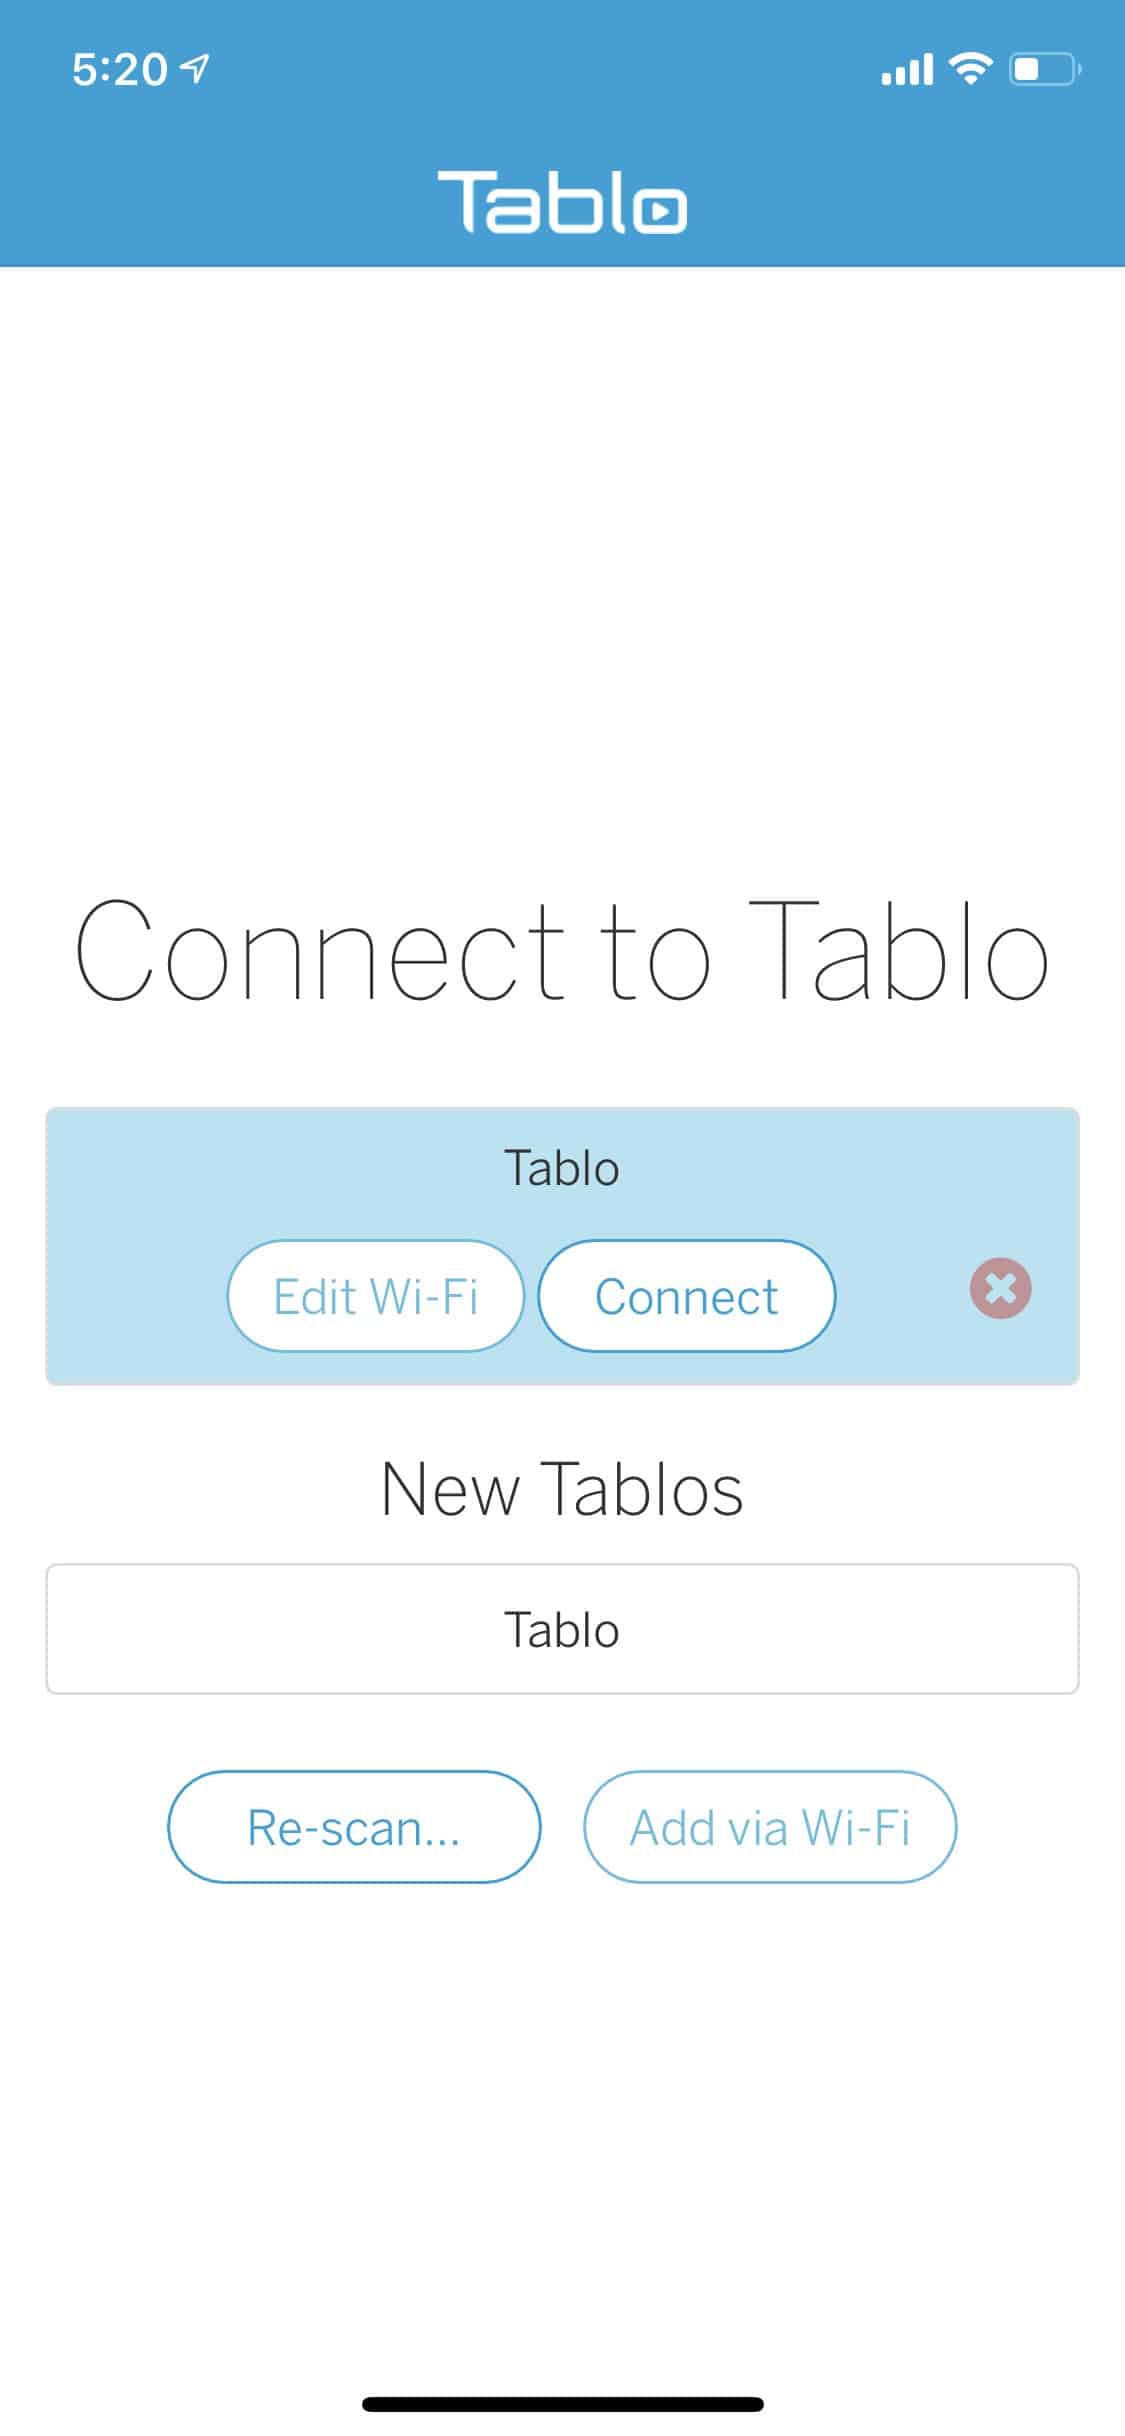 Tablo Quad review - Tablo app and Tablo setup